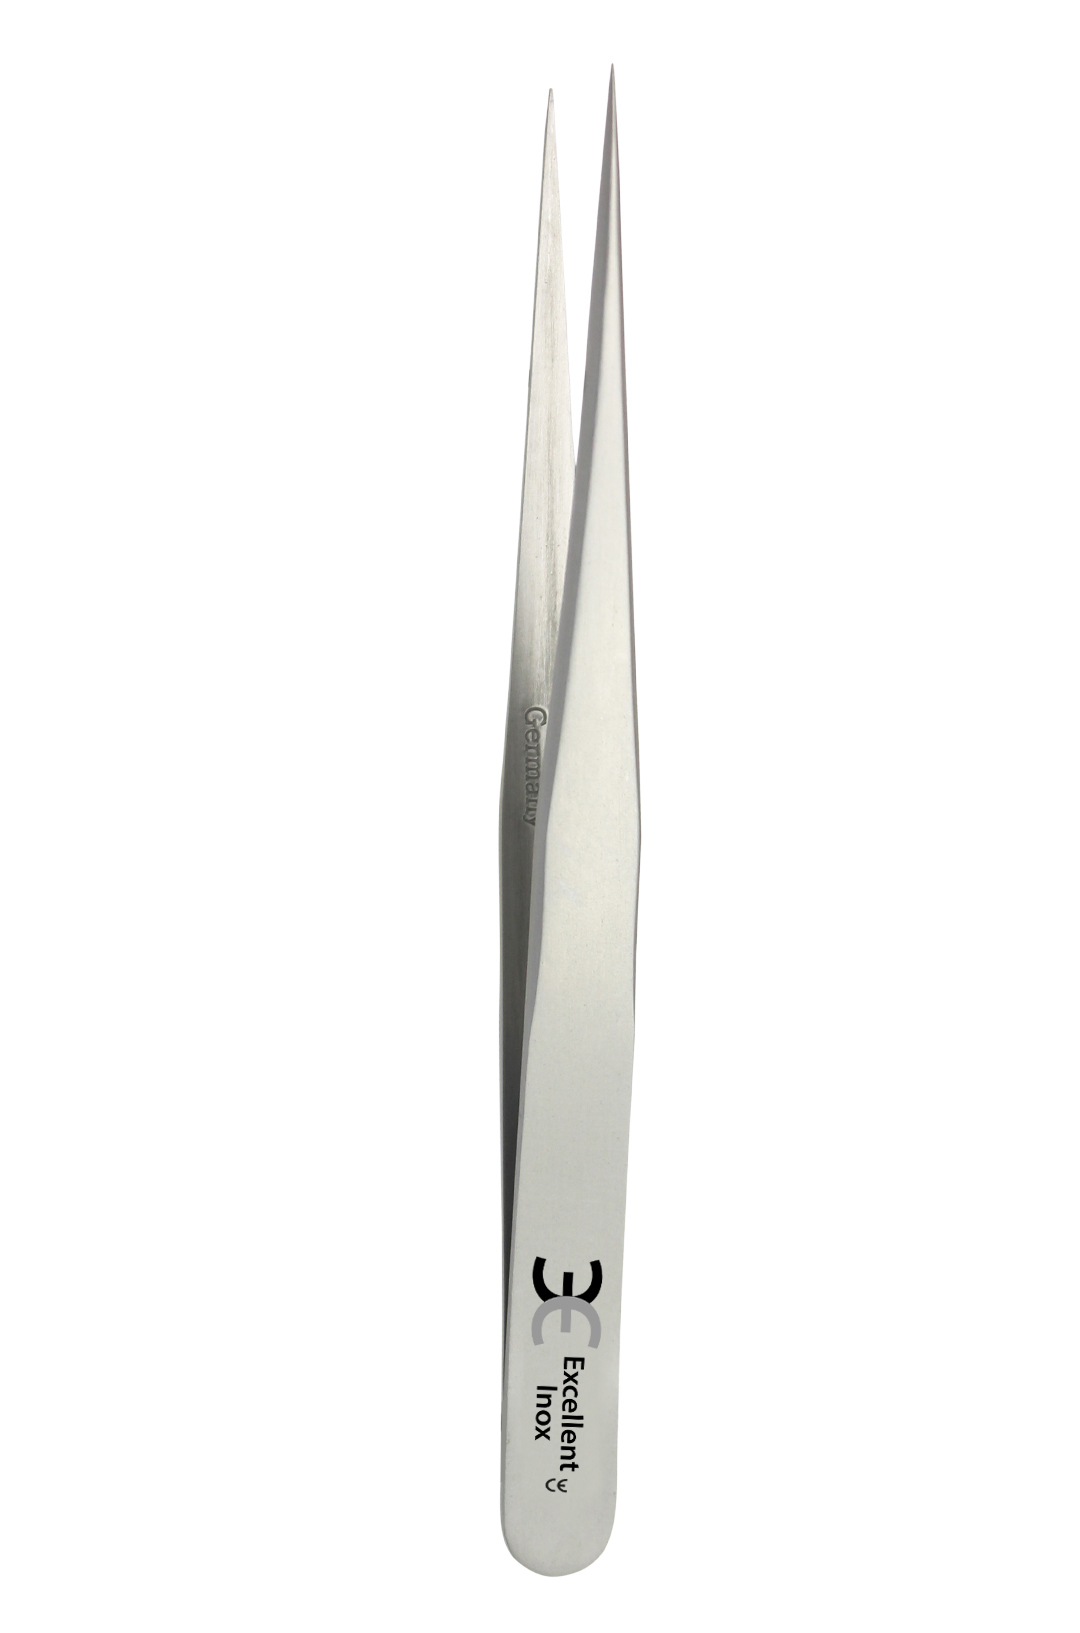 Excellent tweezers 9.0 cm, super pointed, stainless steel